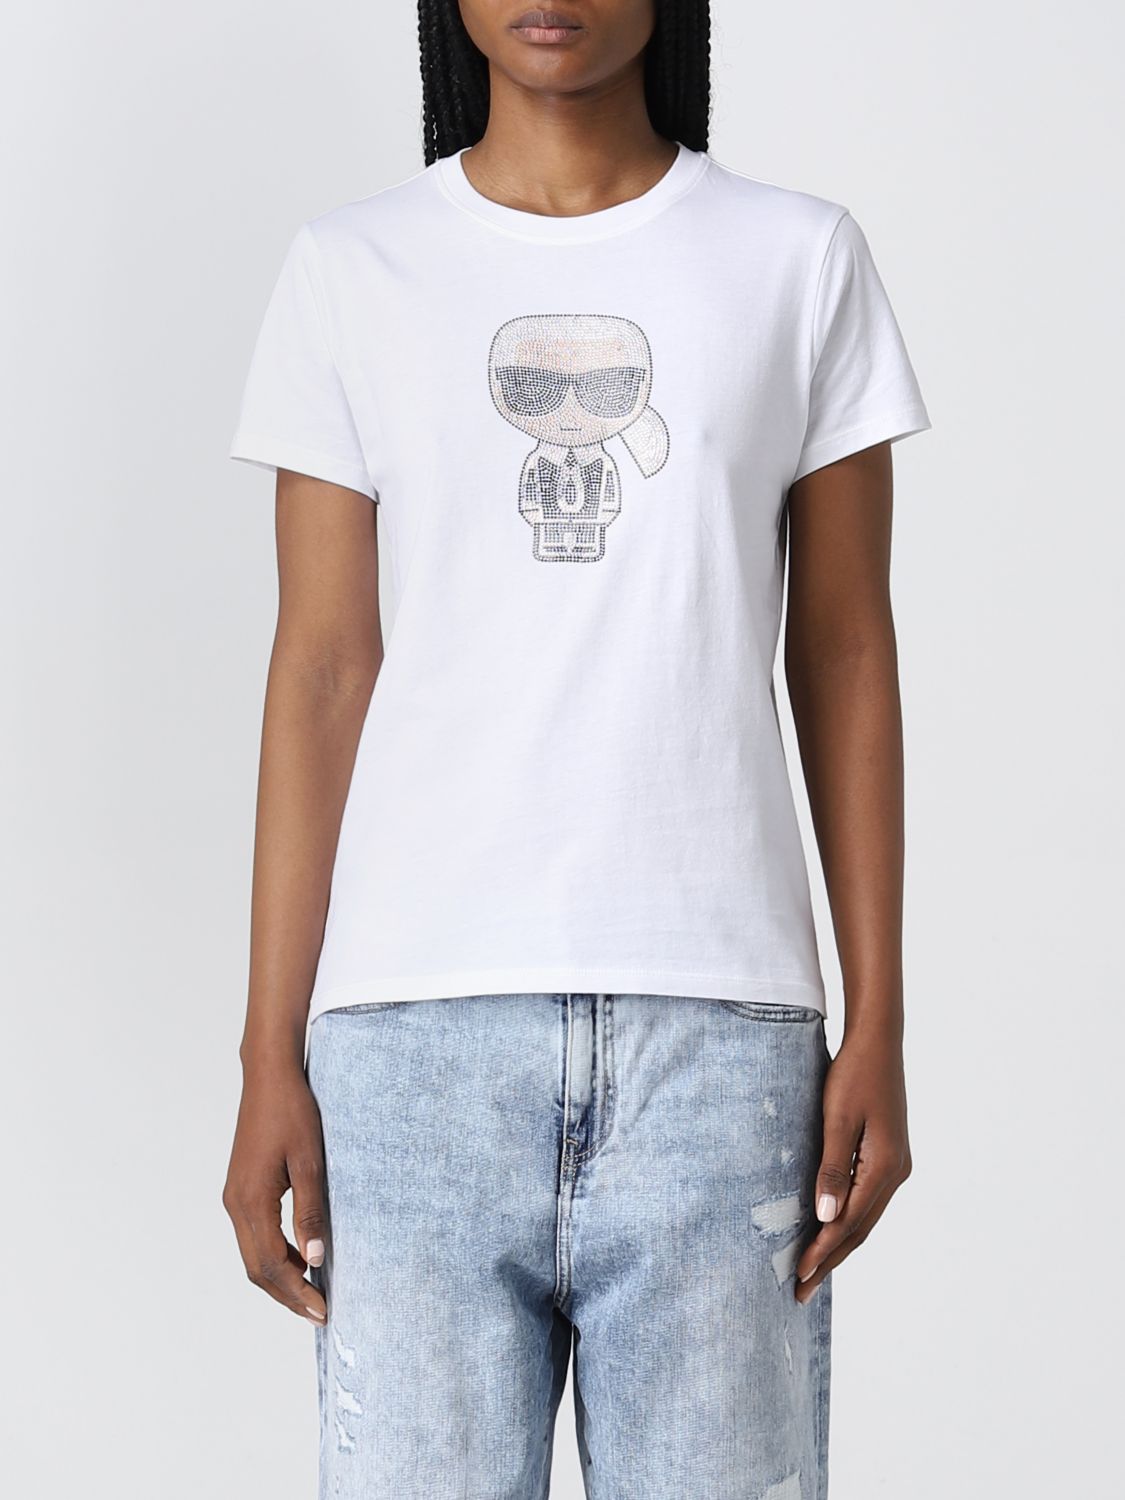 uitspraak Bedienen Kruipen KARL LAGERFELD: t-shirt for woman - White | Karl Lagerfeld t-shirt 210W1726  online on GIGLIO.COM